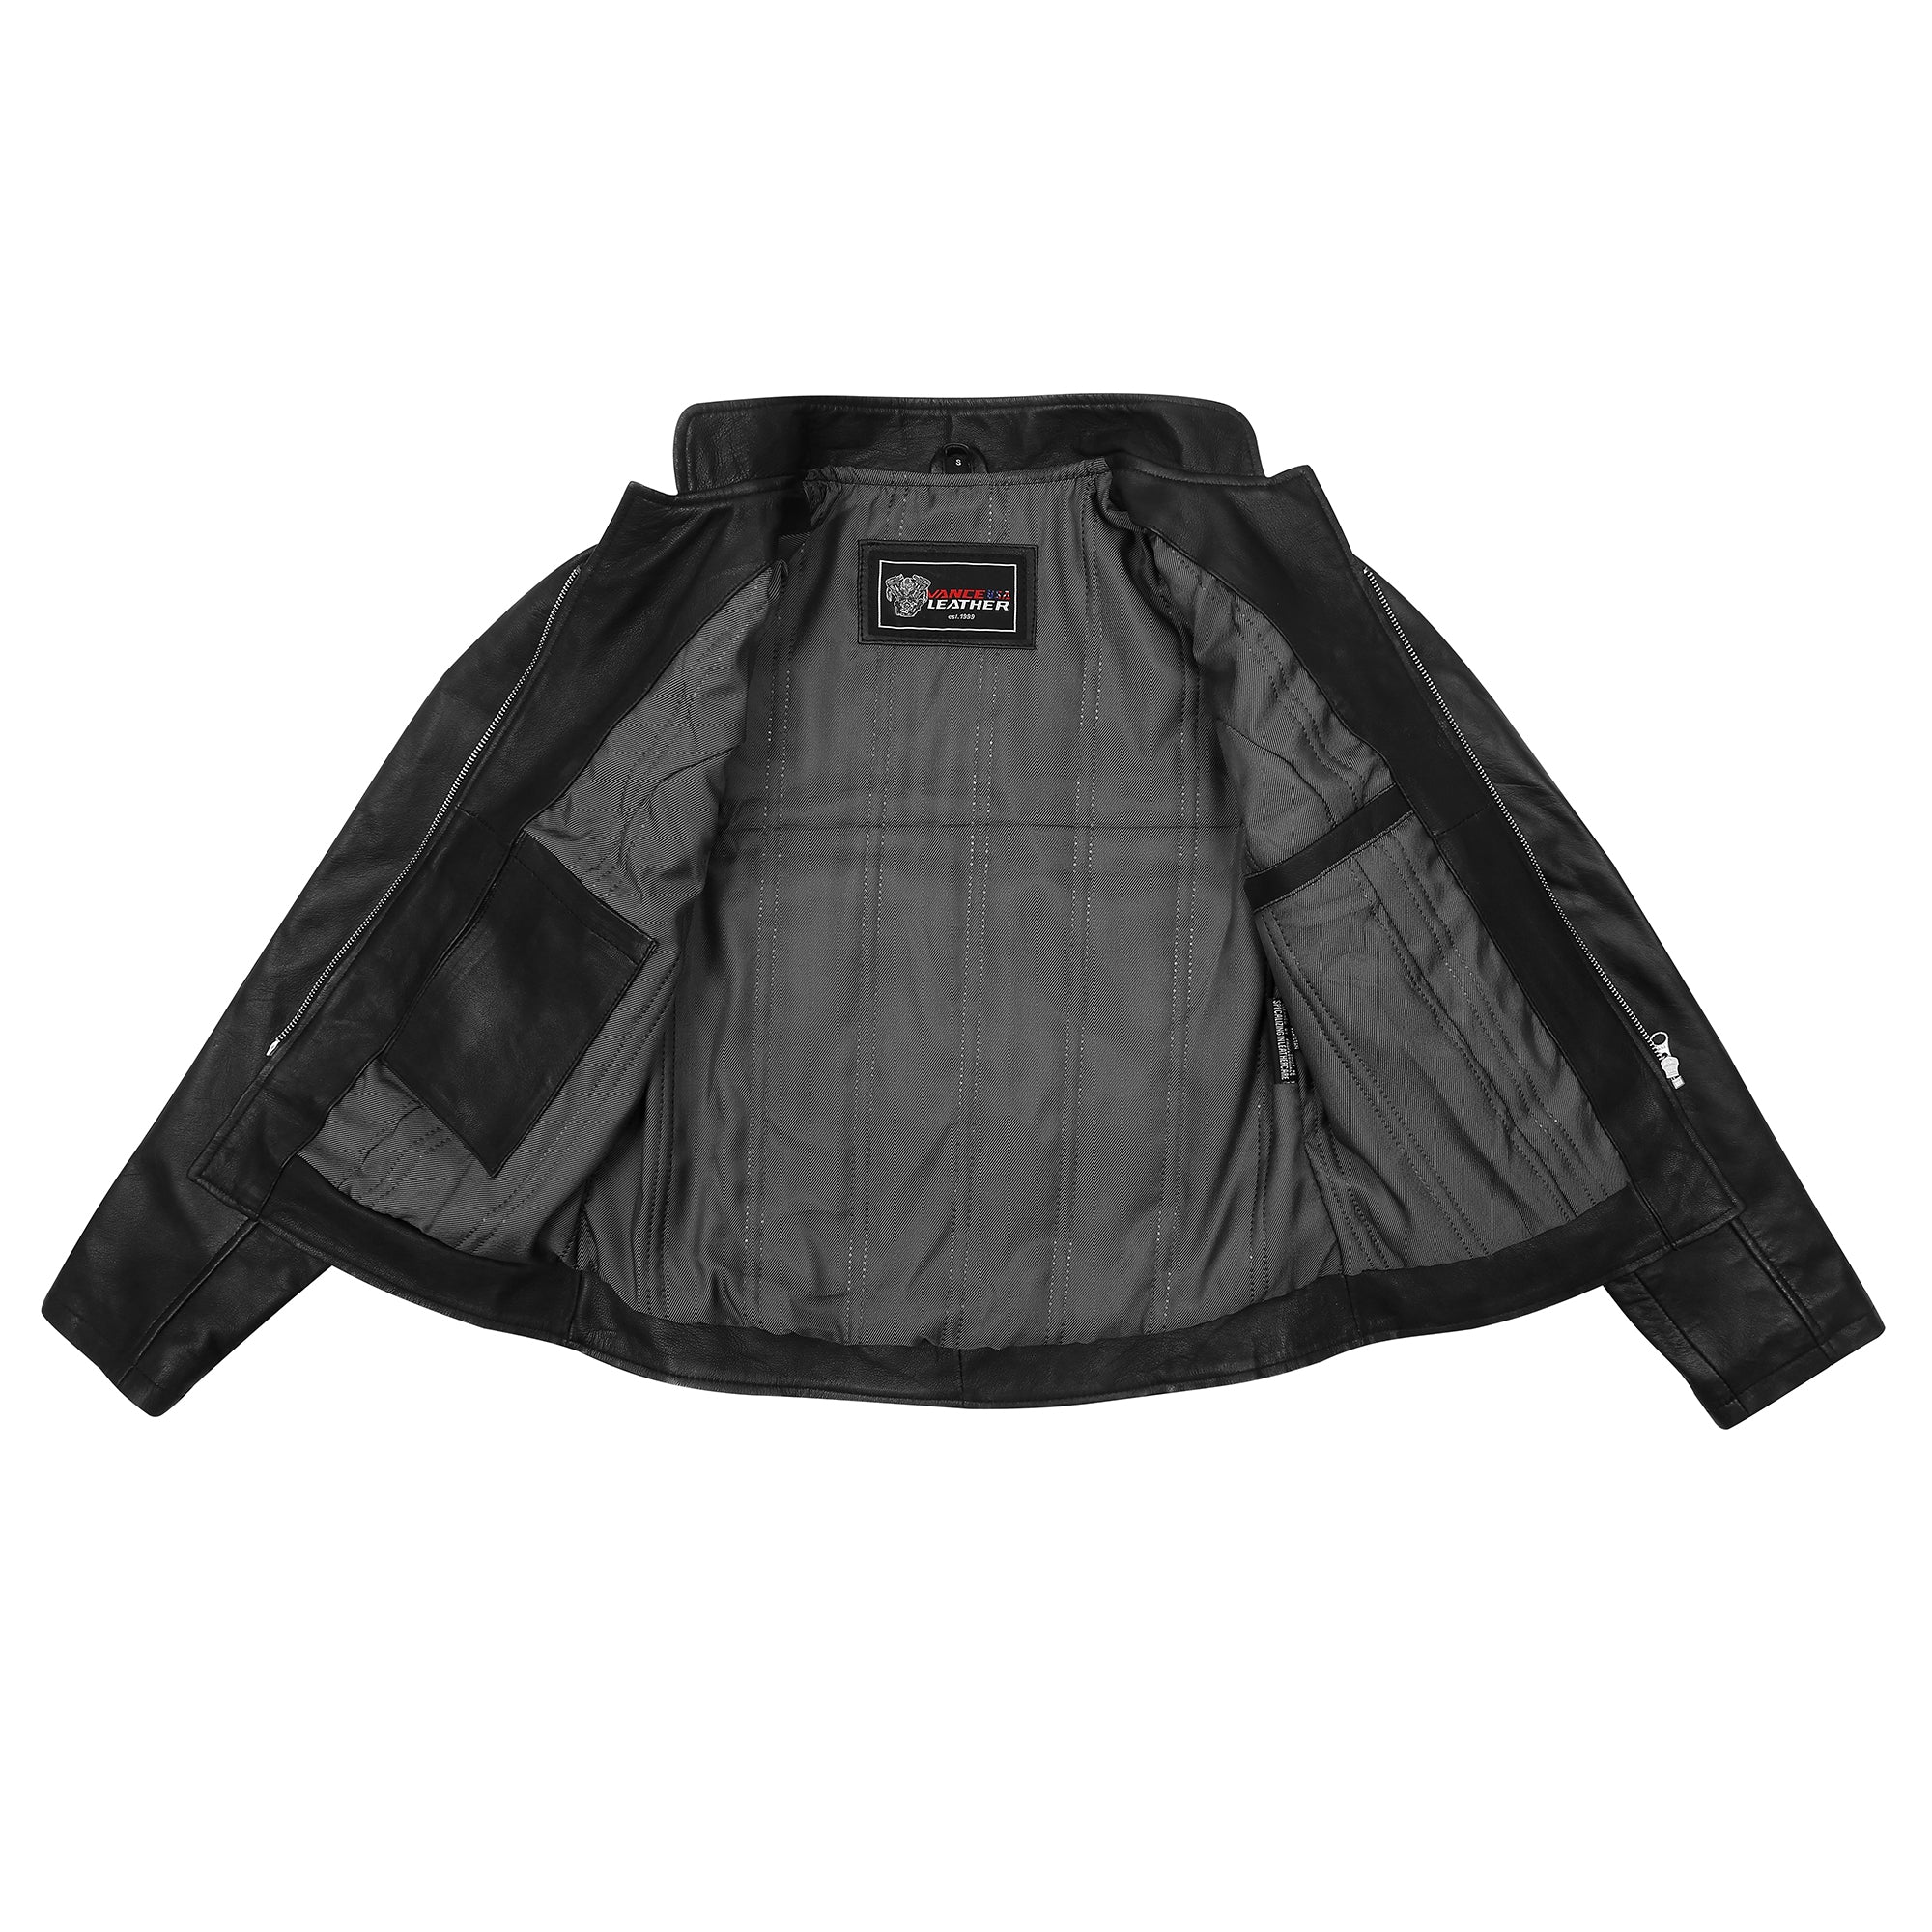 Ladies Premium Soft Lightweight Black Fitted Leather Jacket